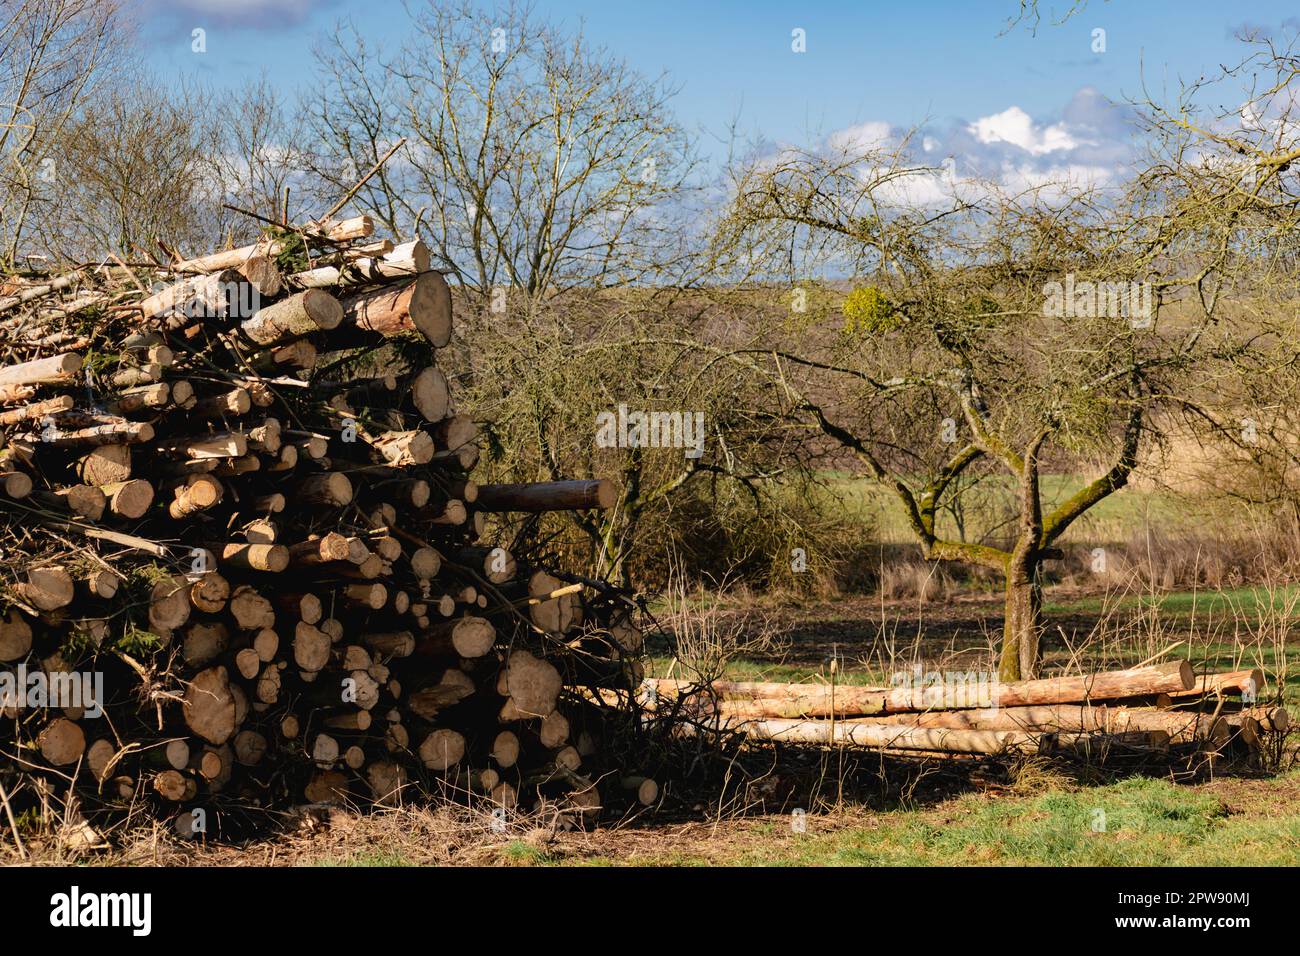 Huge pile of trunks, dead fir to produce biomass, deforestation scene in rural landscape Stock Photo